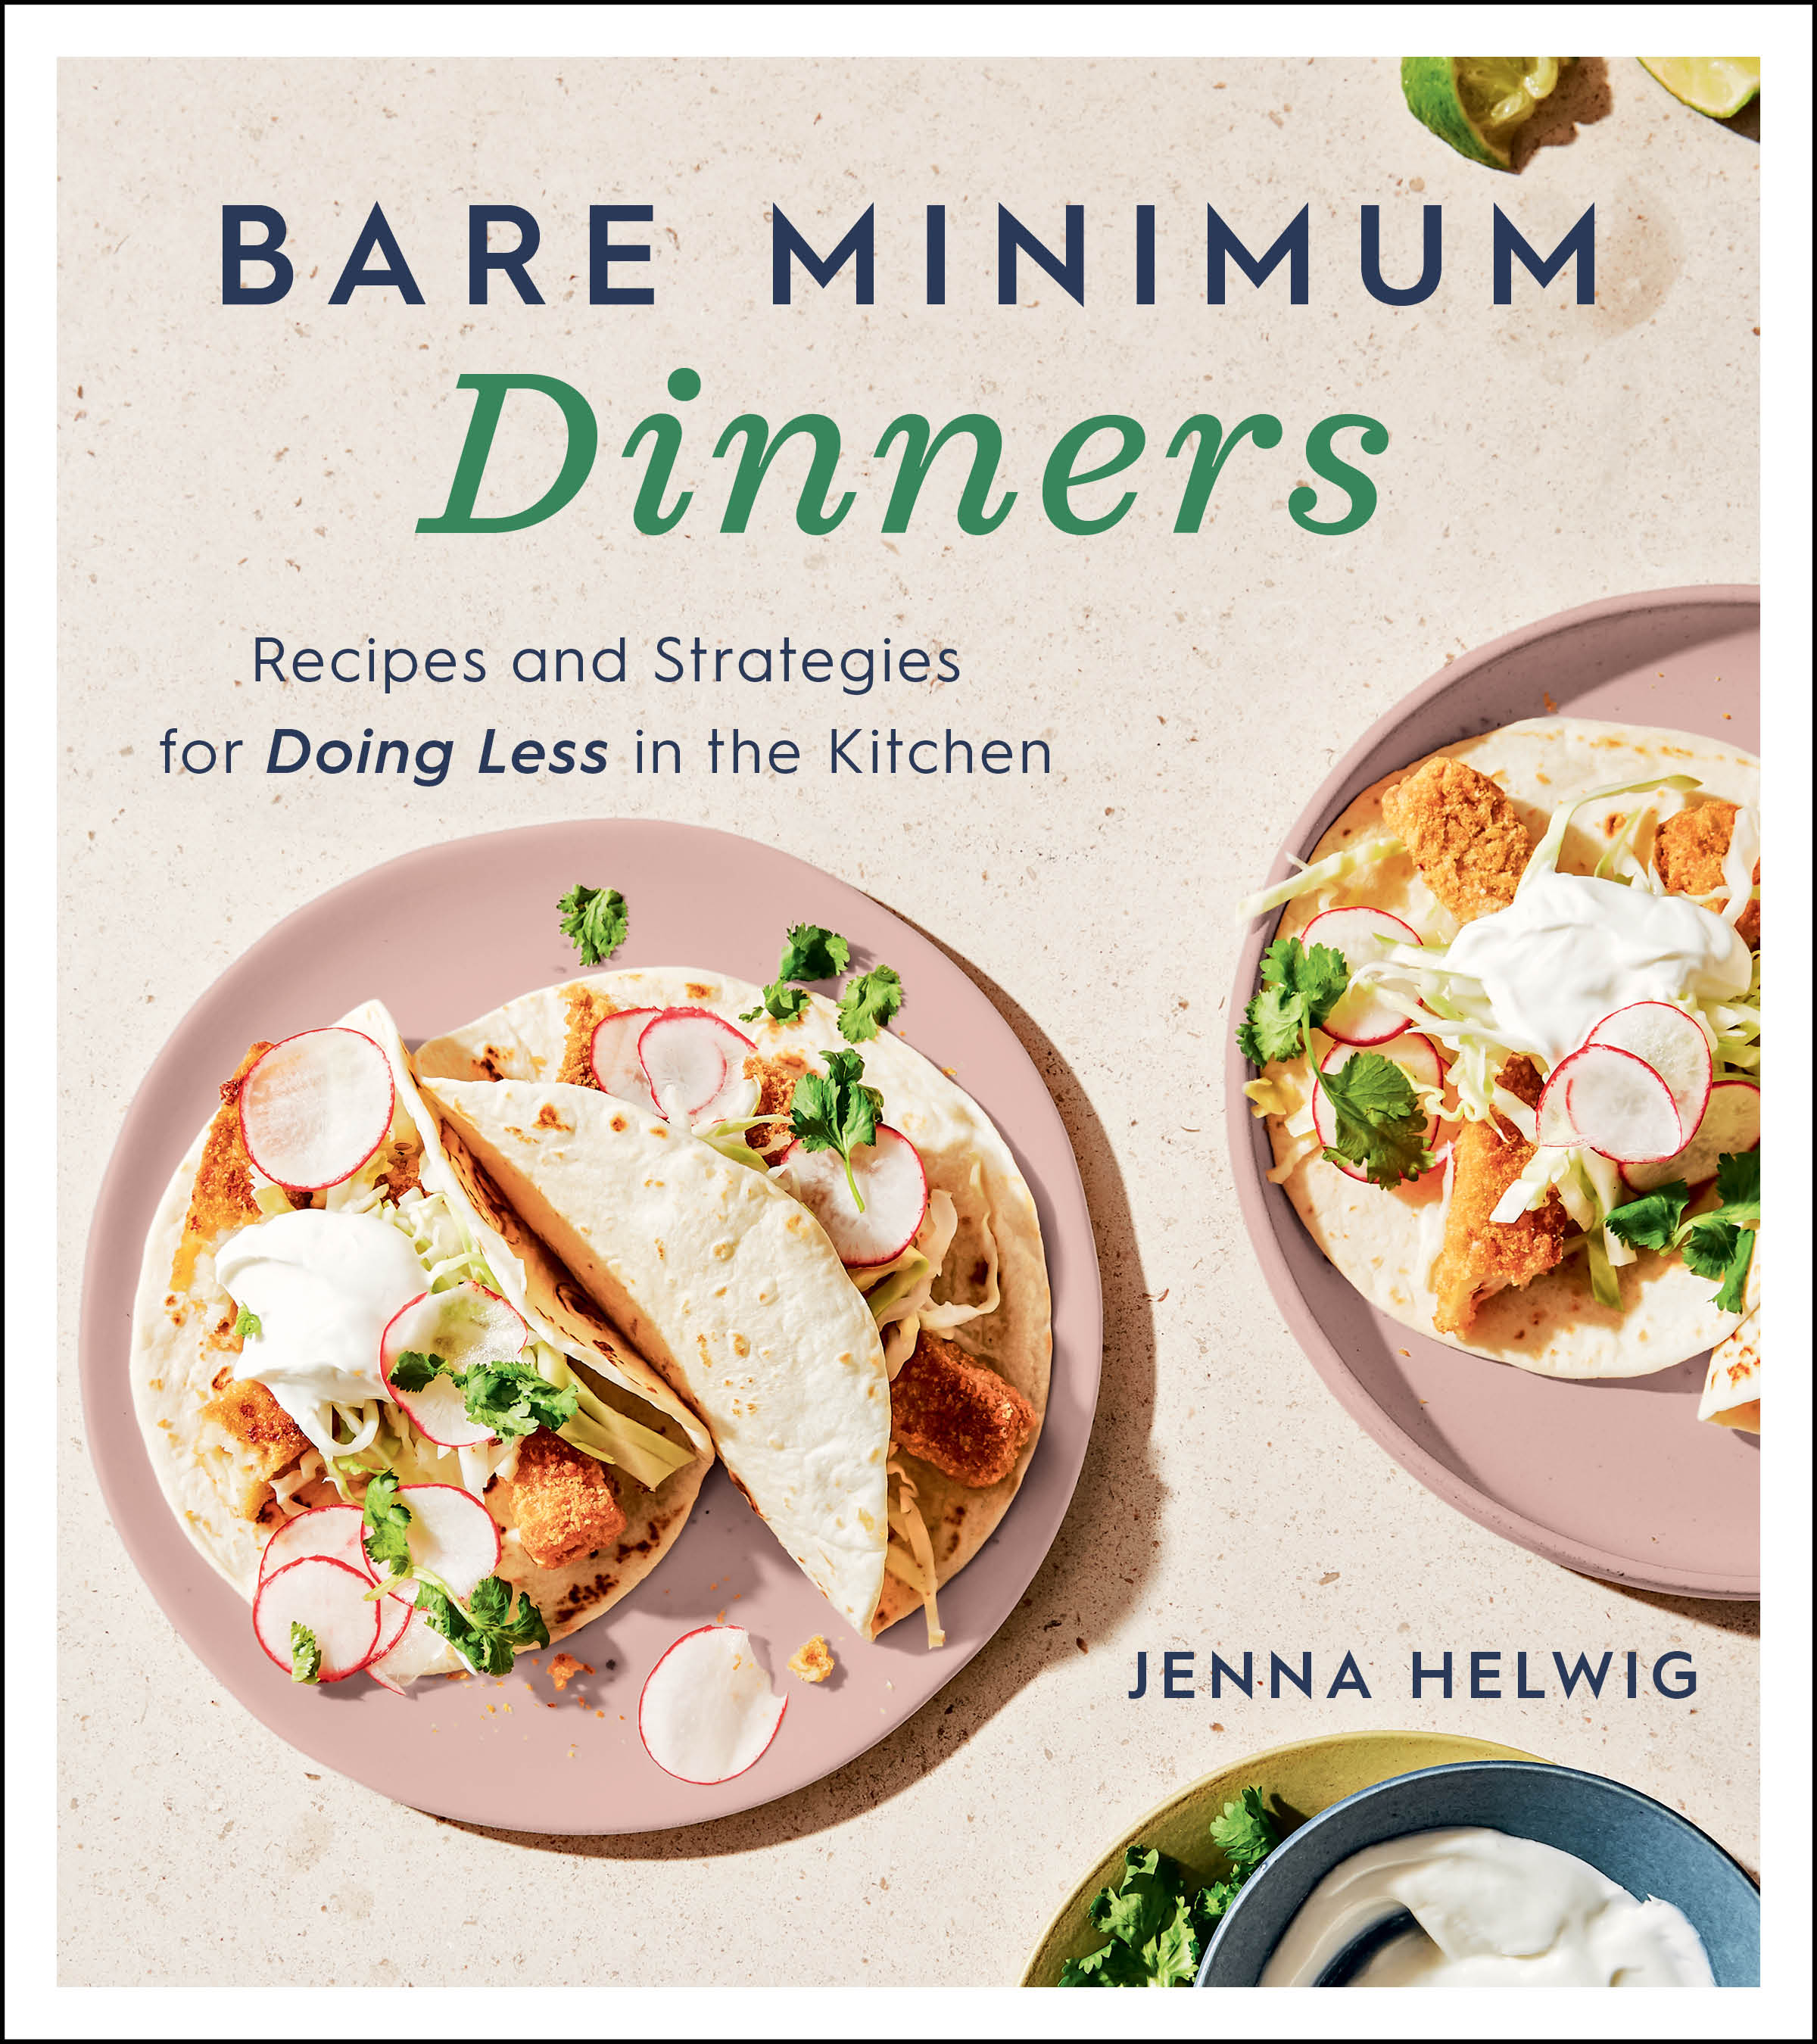 Bare Minimum Dinners cookbook cover